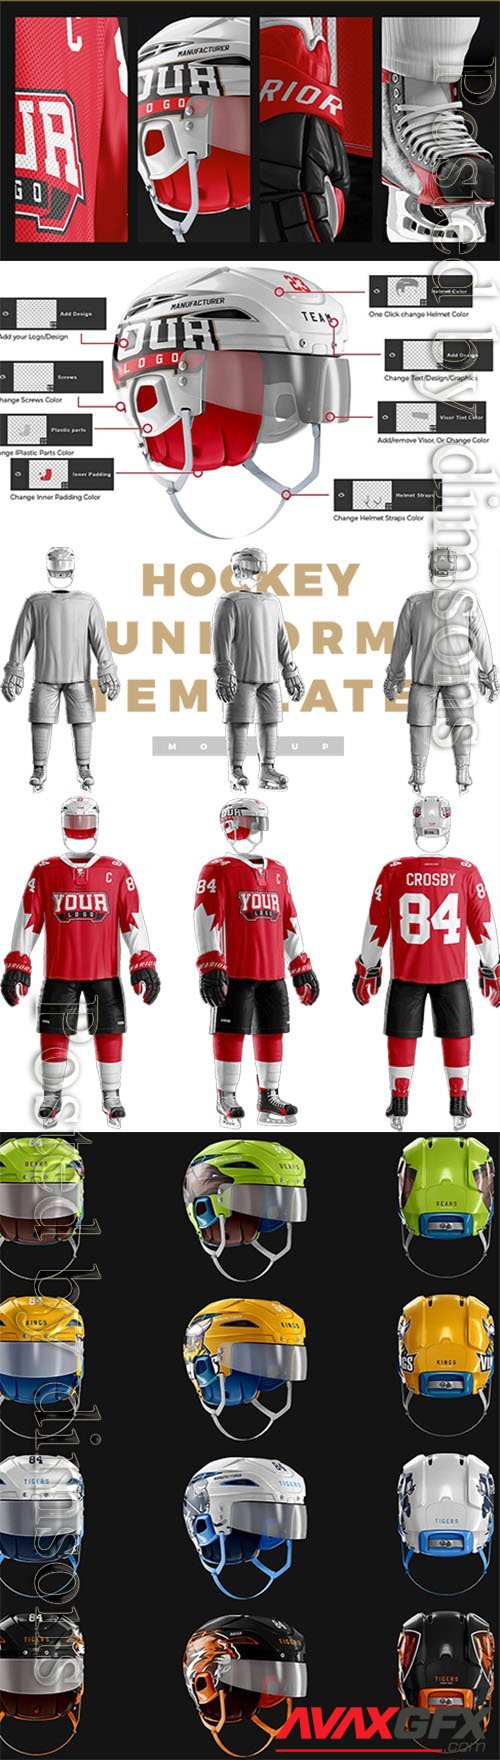 Ice Hockey Uniform Mockup Template